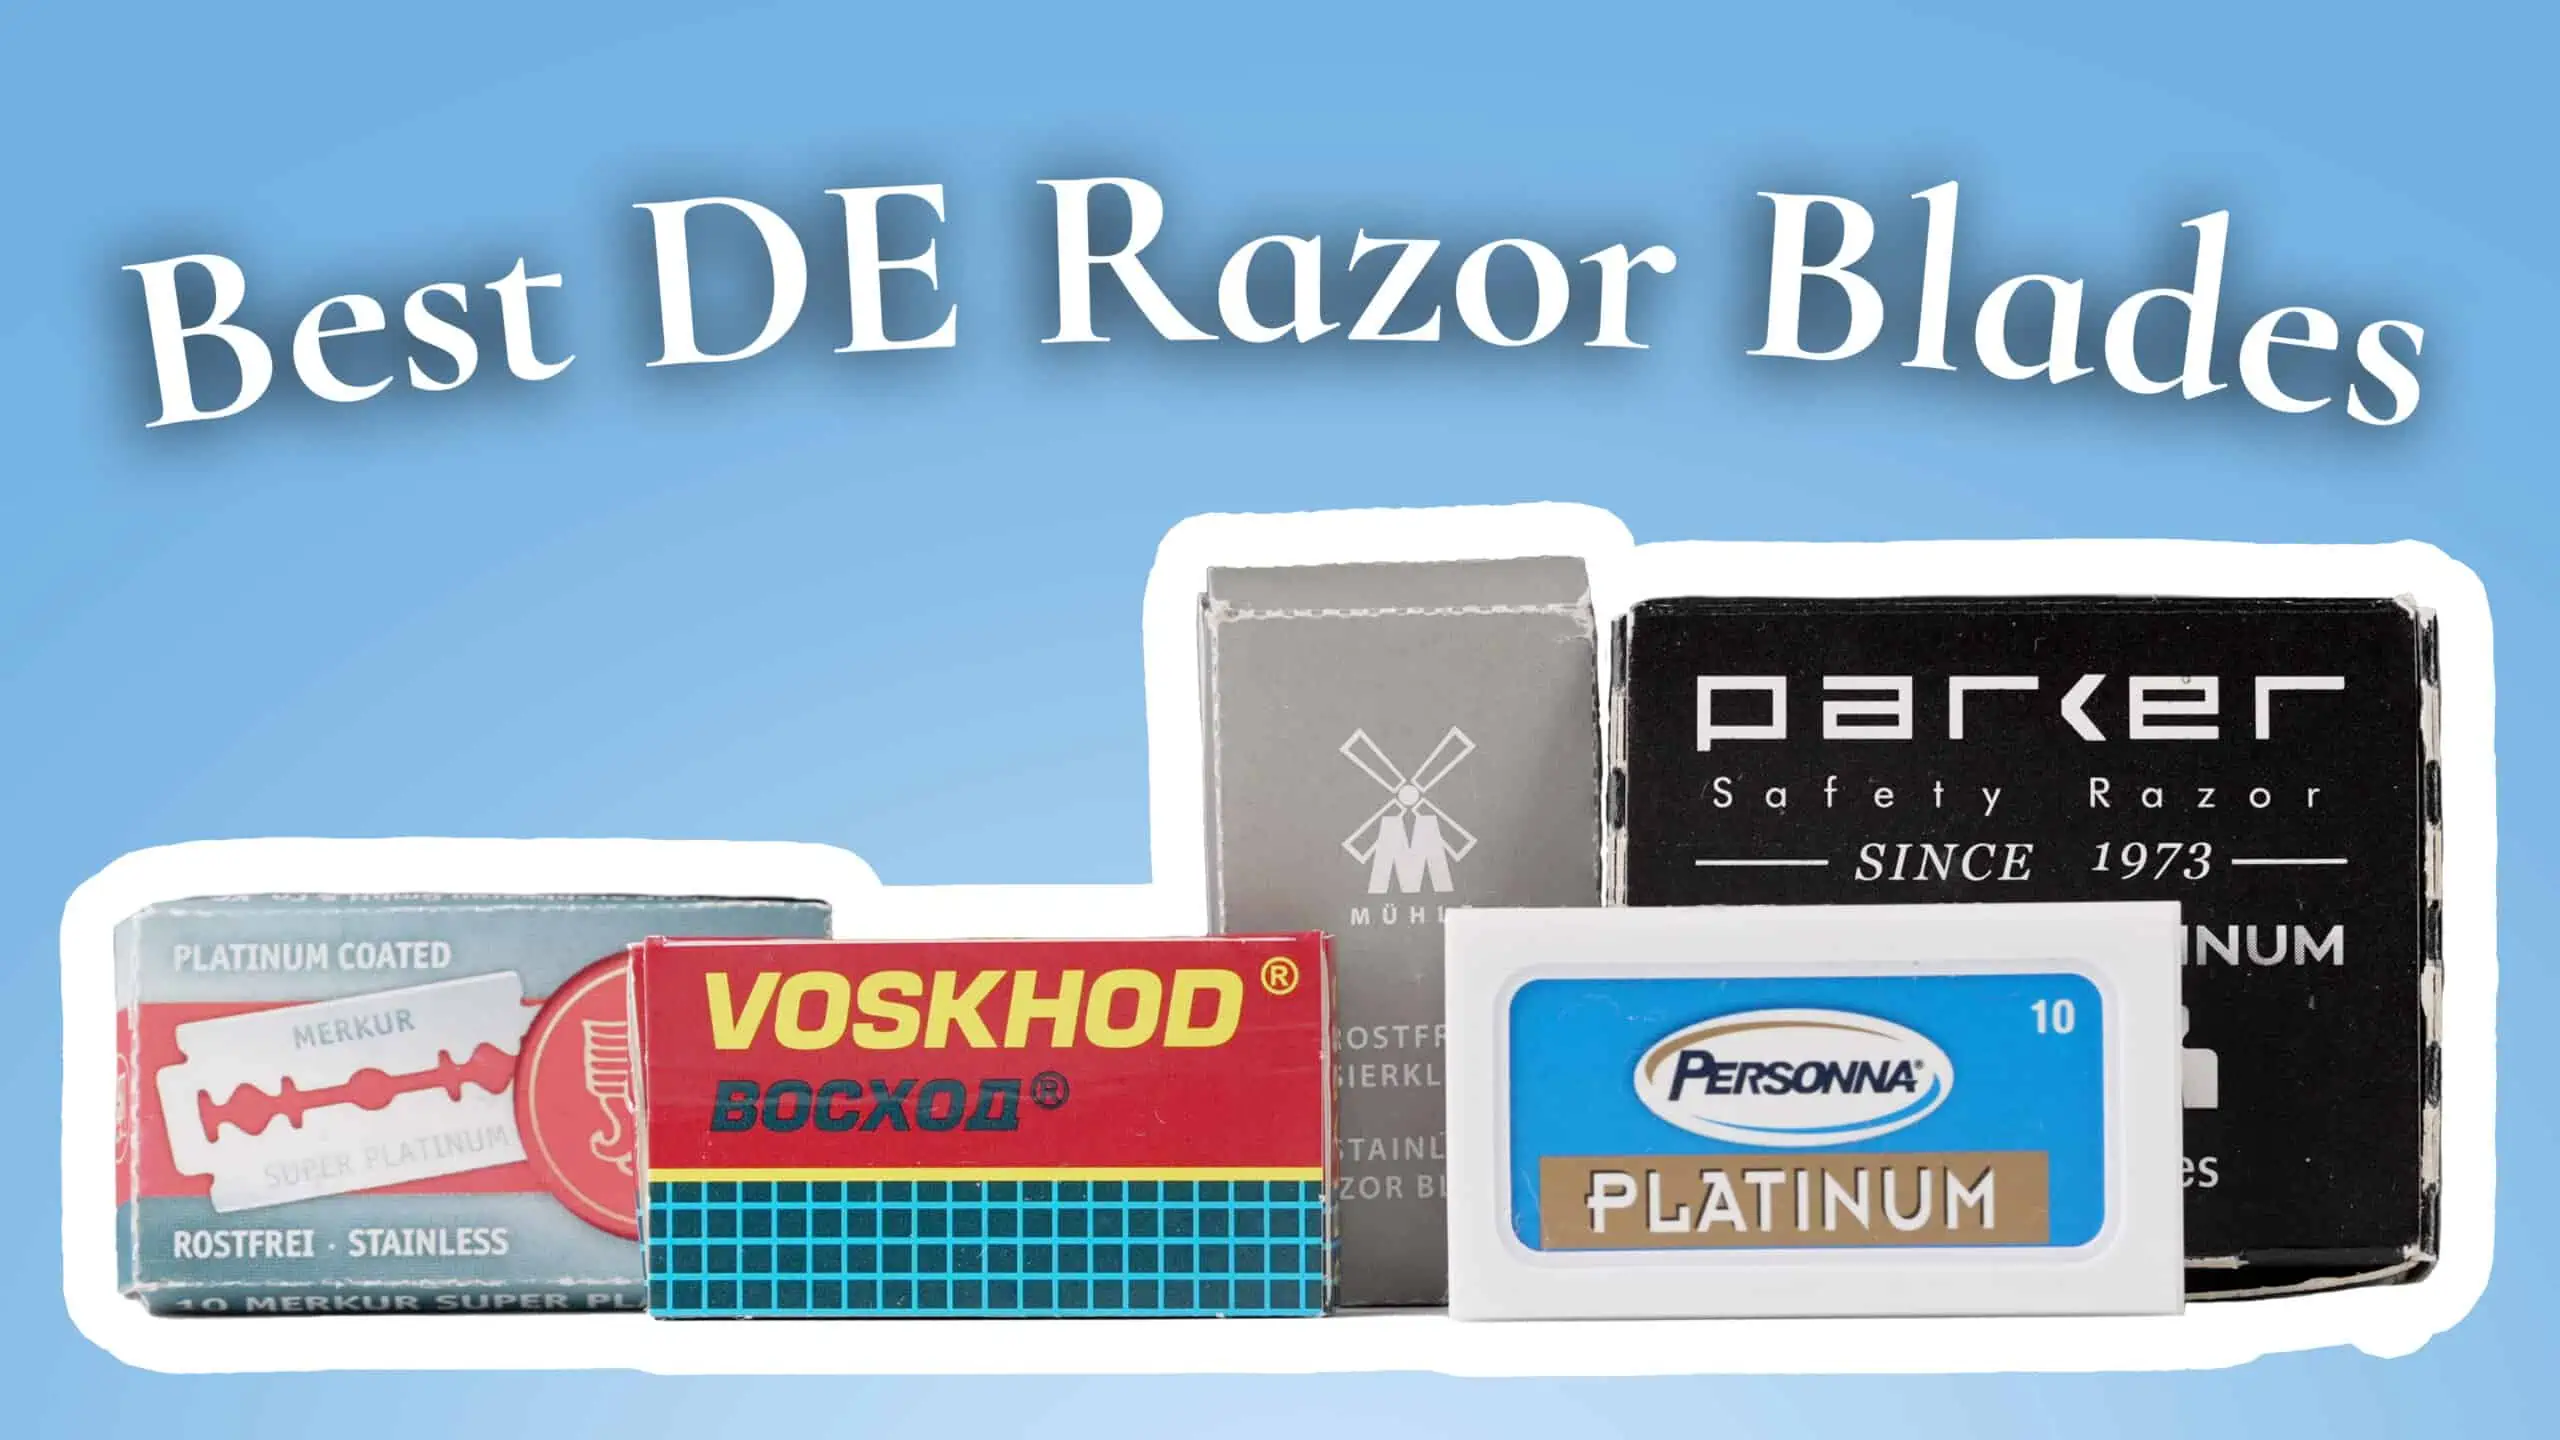 Best DE Razor Blades 3840x2160 v1 scaled